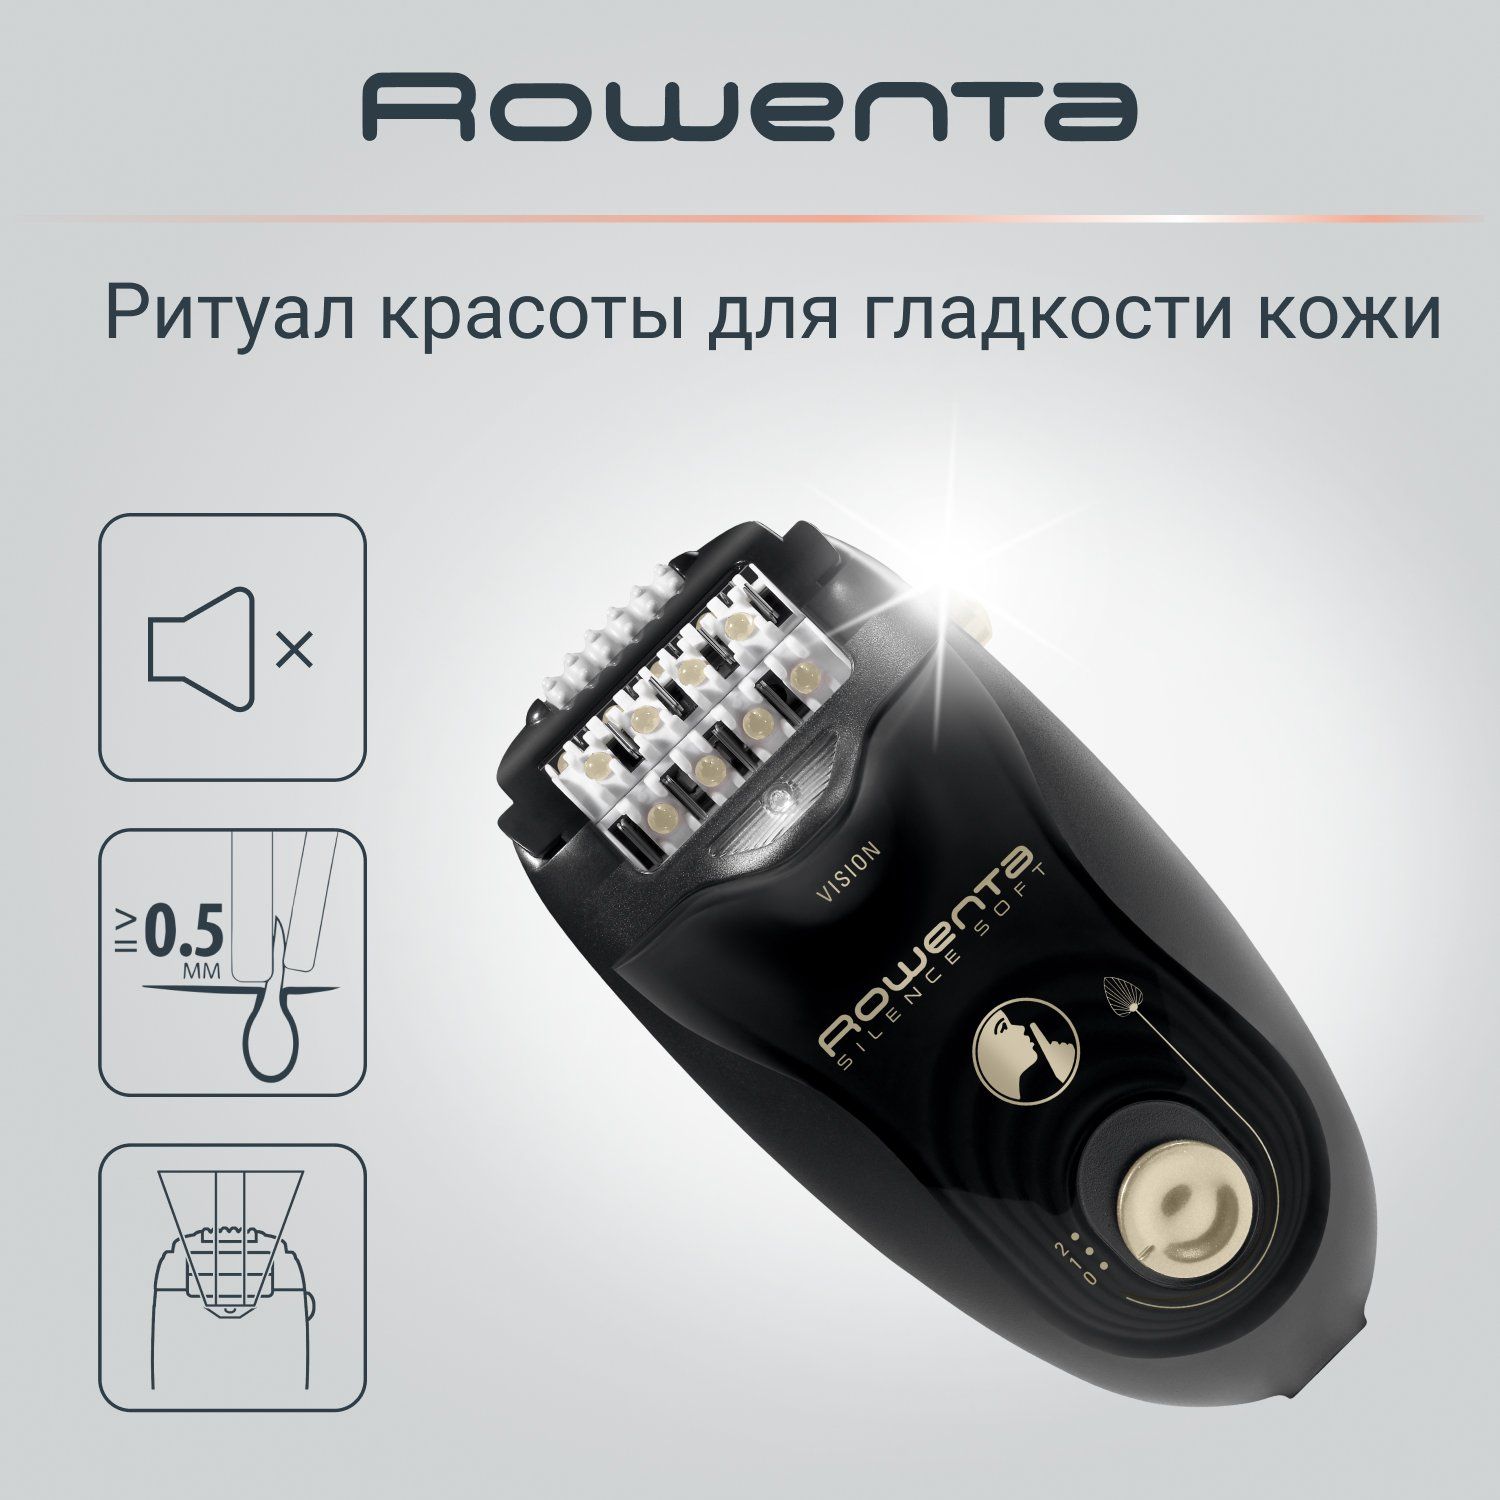 Эпилятор Rowenta Silence Soft EP5628F0, черный эпилятор rowenta silence soft ep5620d0